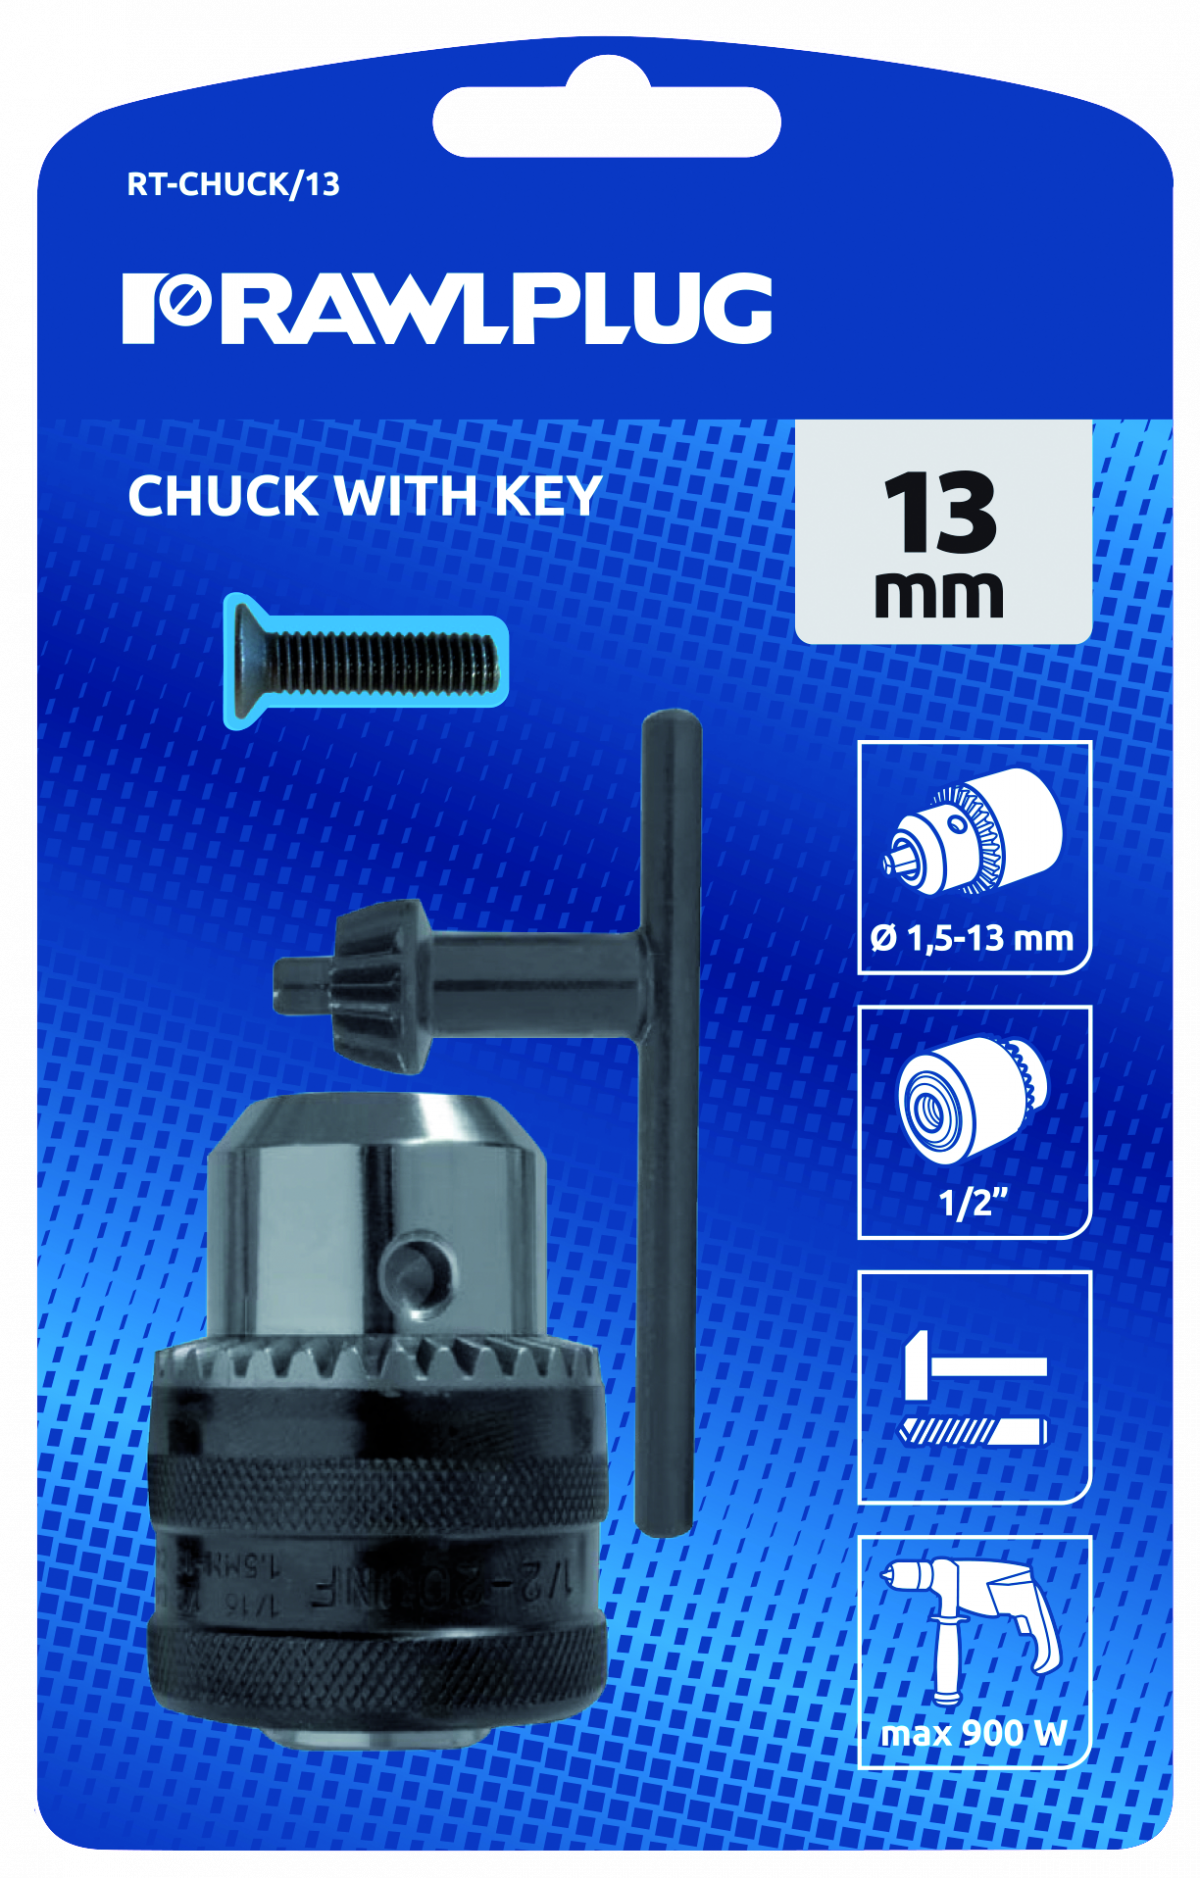 RT-CHUCK/13 Chuck with key